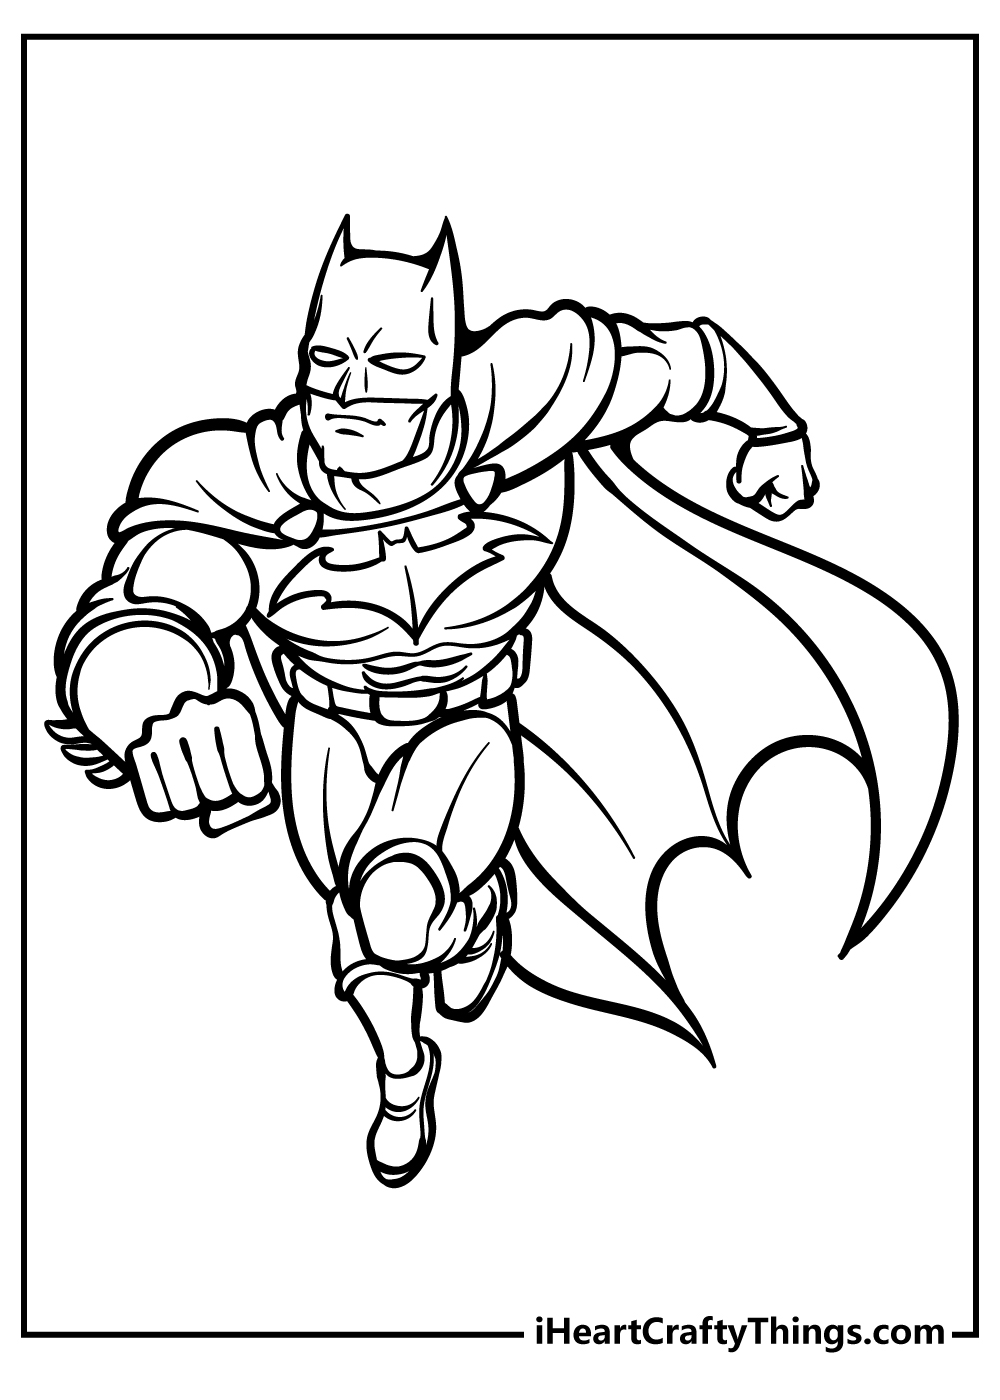 Batman coloring pages free printables